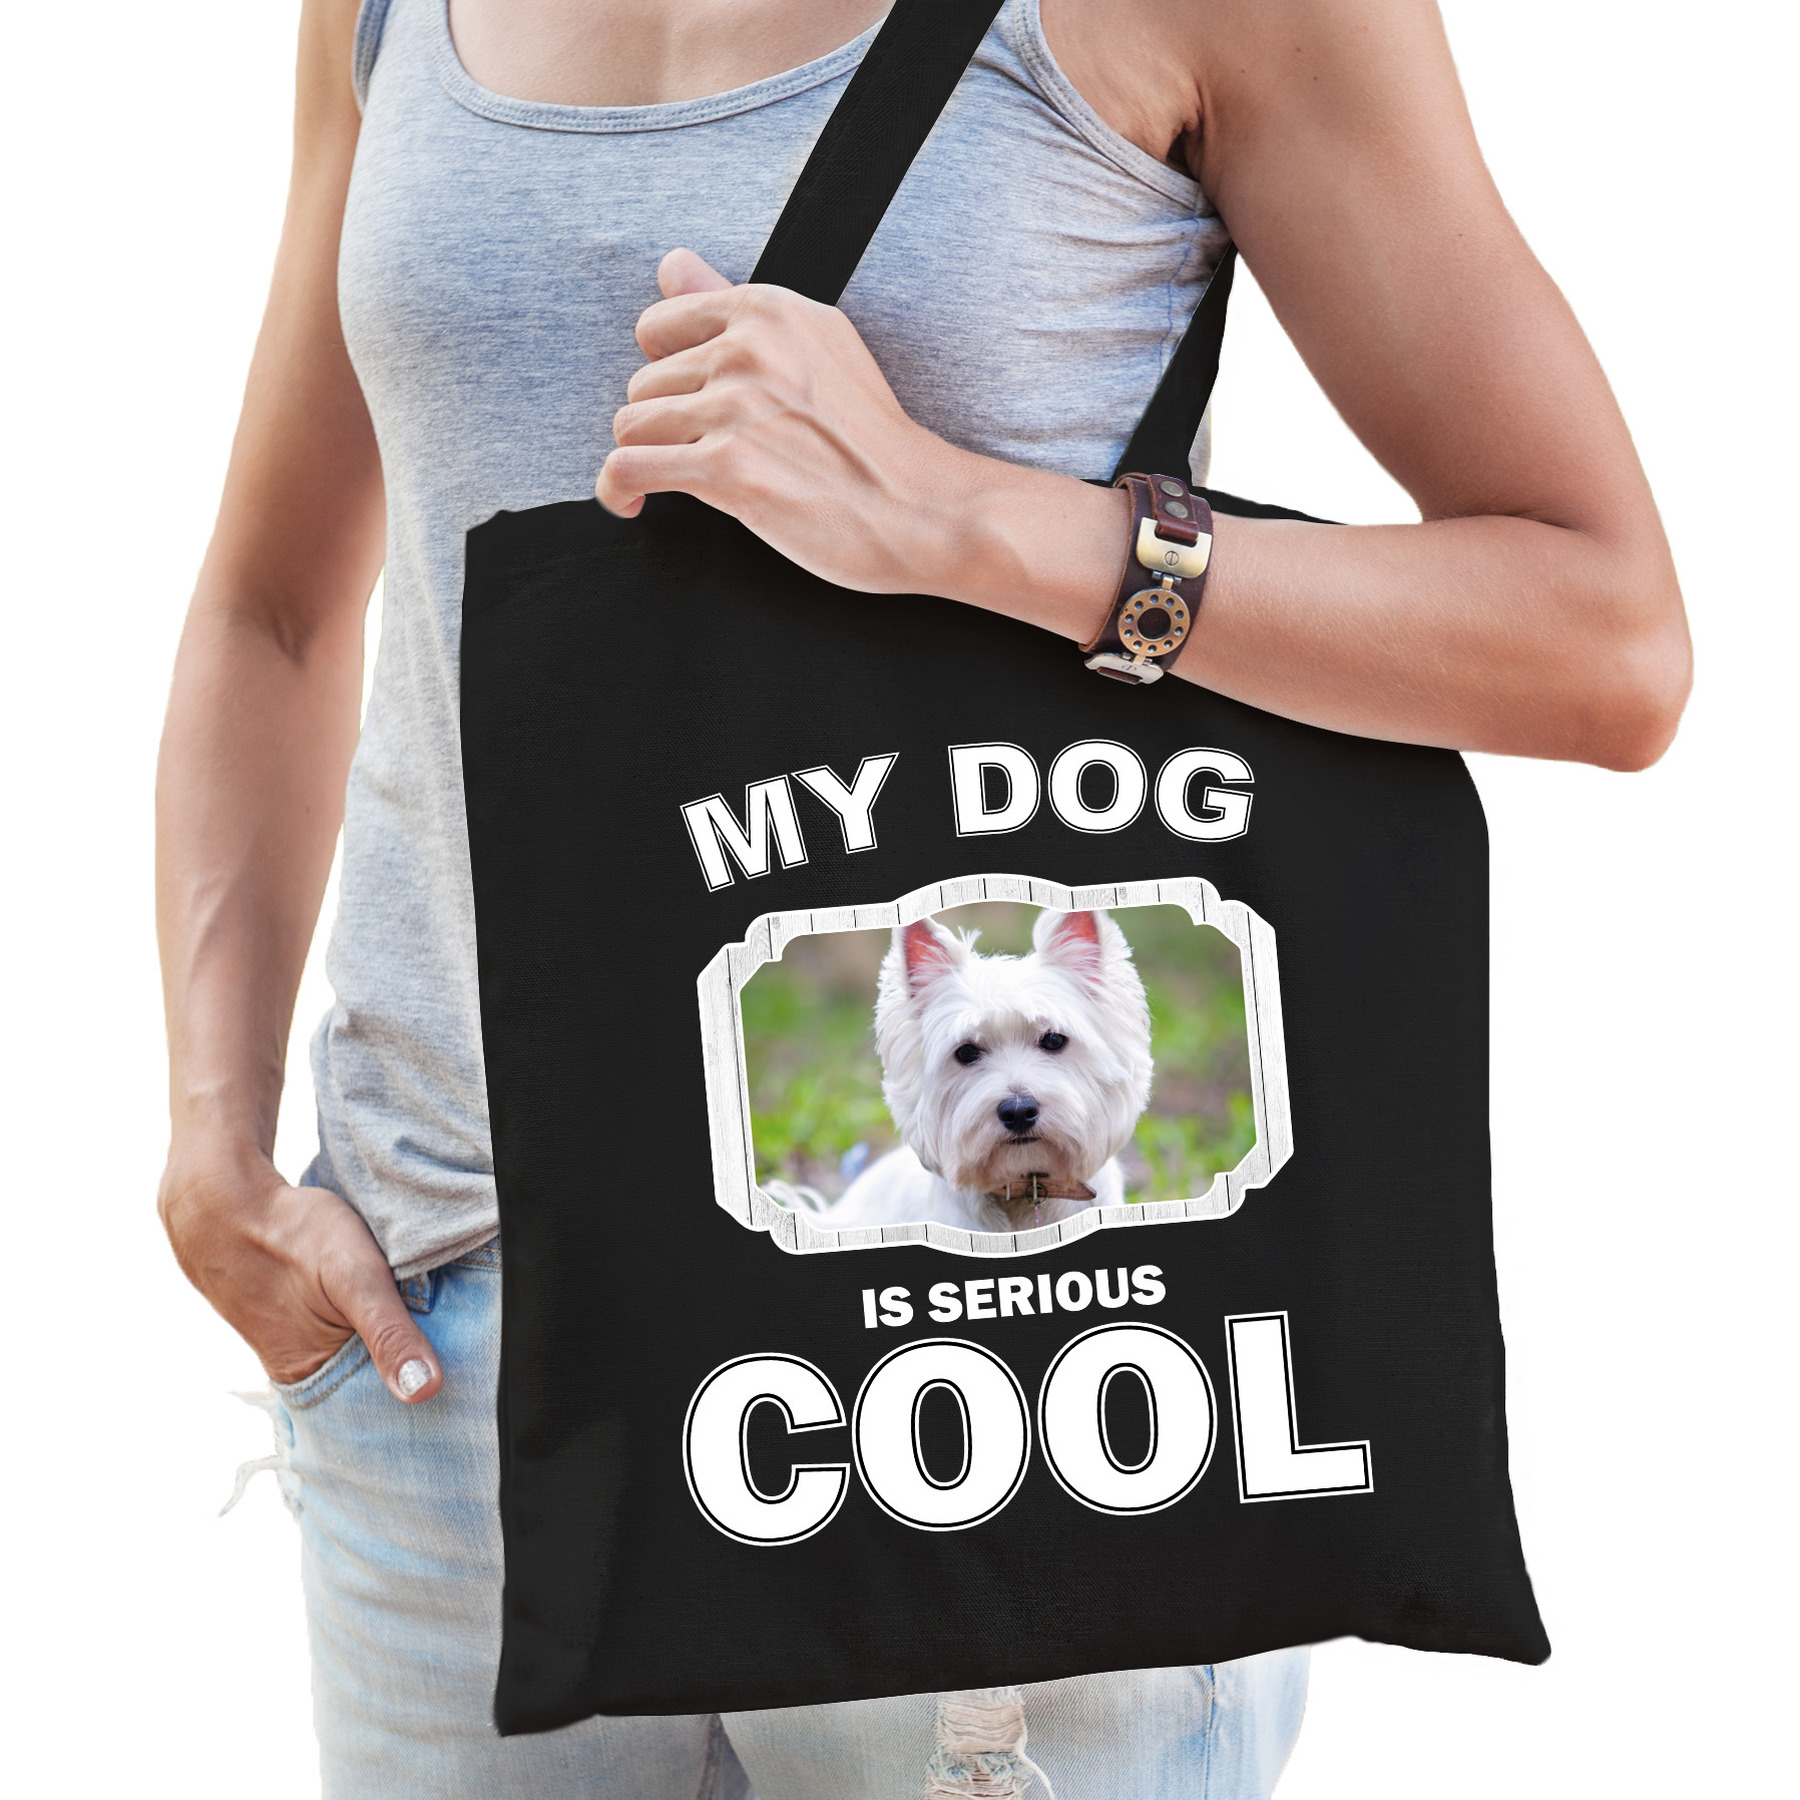 Katoenen tasje my dog is serious cool zwart - West terrier honden cadeau tas